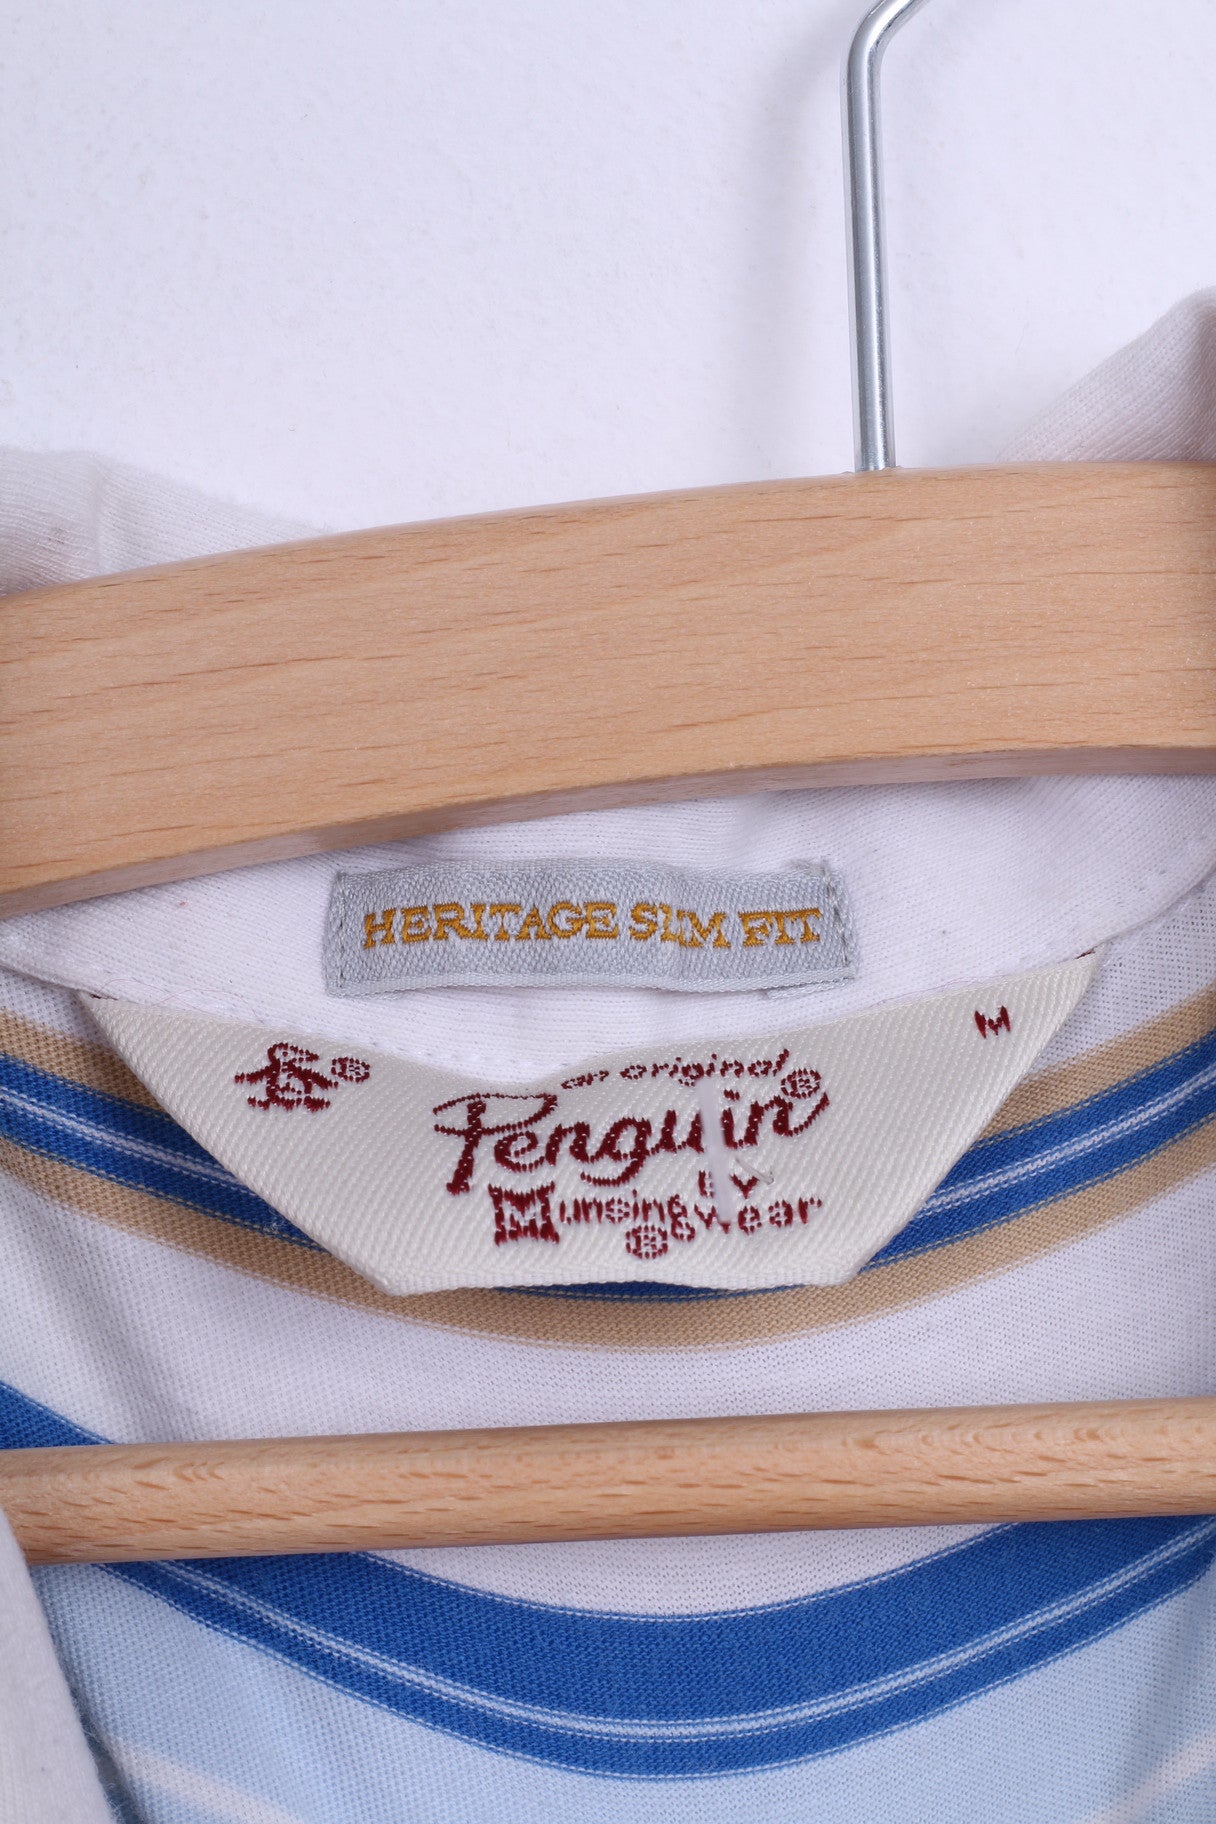 Penguin Mens M Polo Shirt White Short Sleeve Cotton Striped